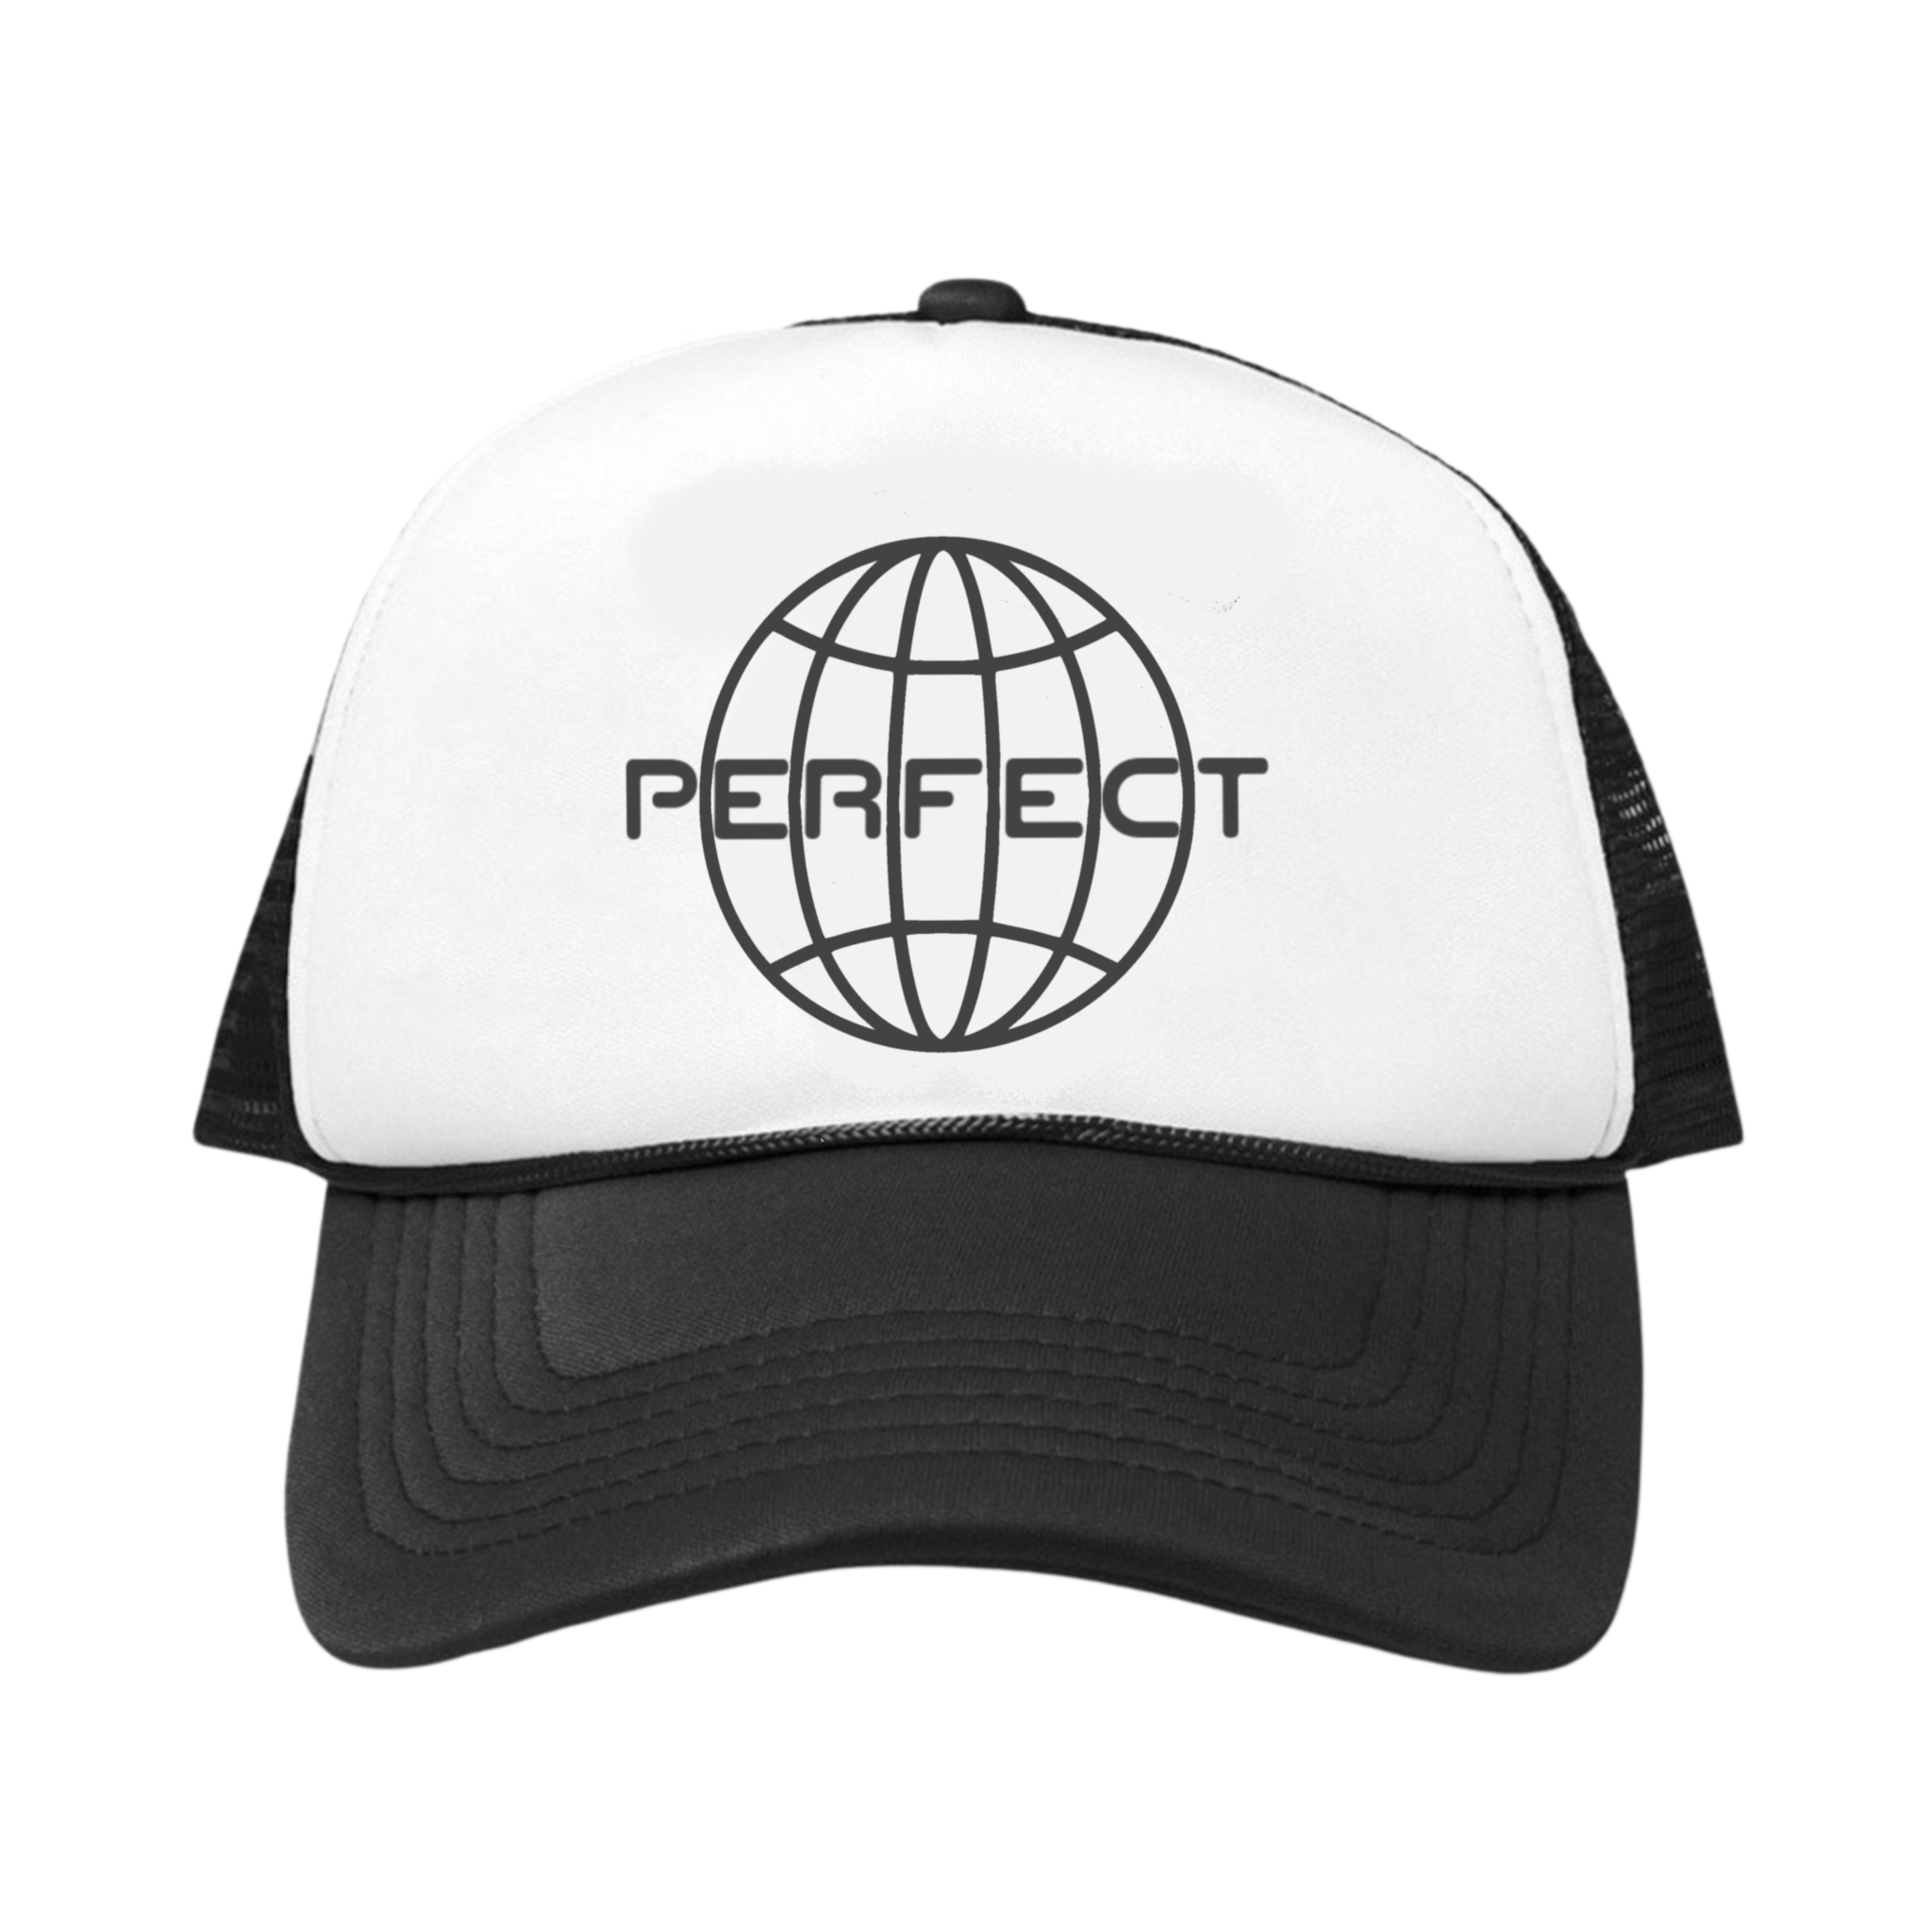 save the world trucker hat